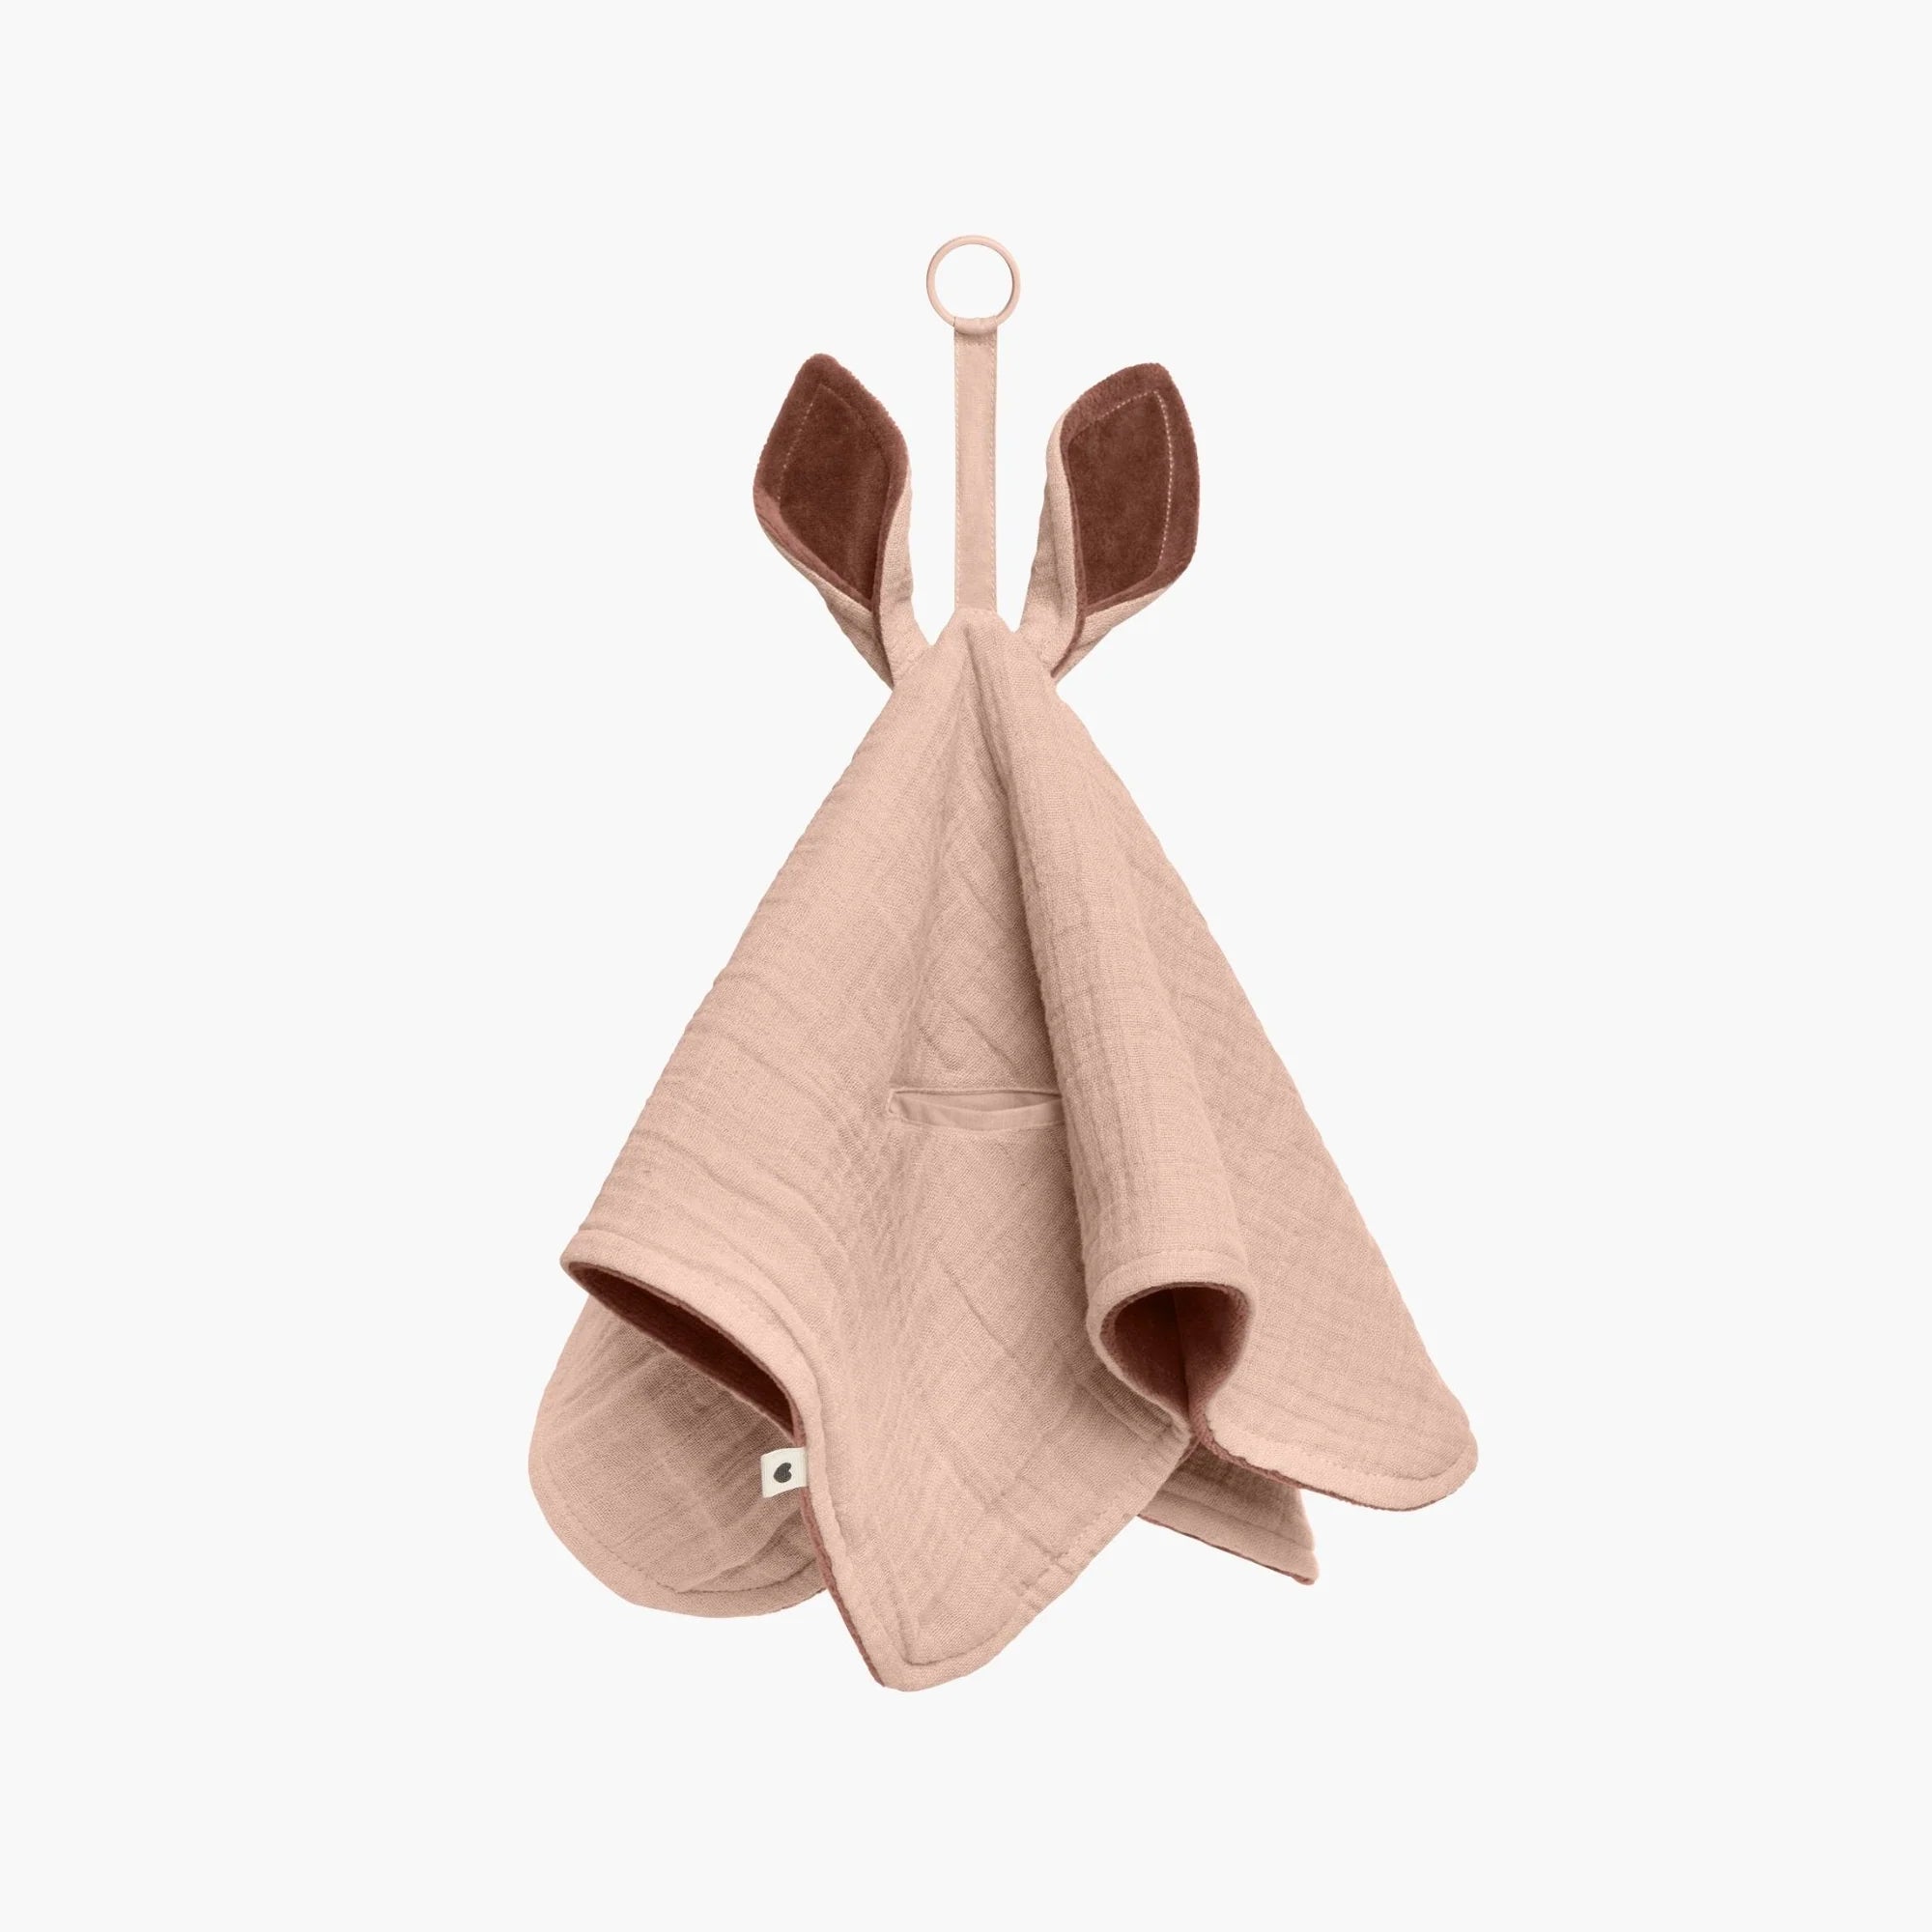 BIBS Kangaroo Cuddle Cloth - Tiny Tots Baby Store 